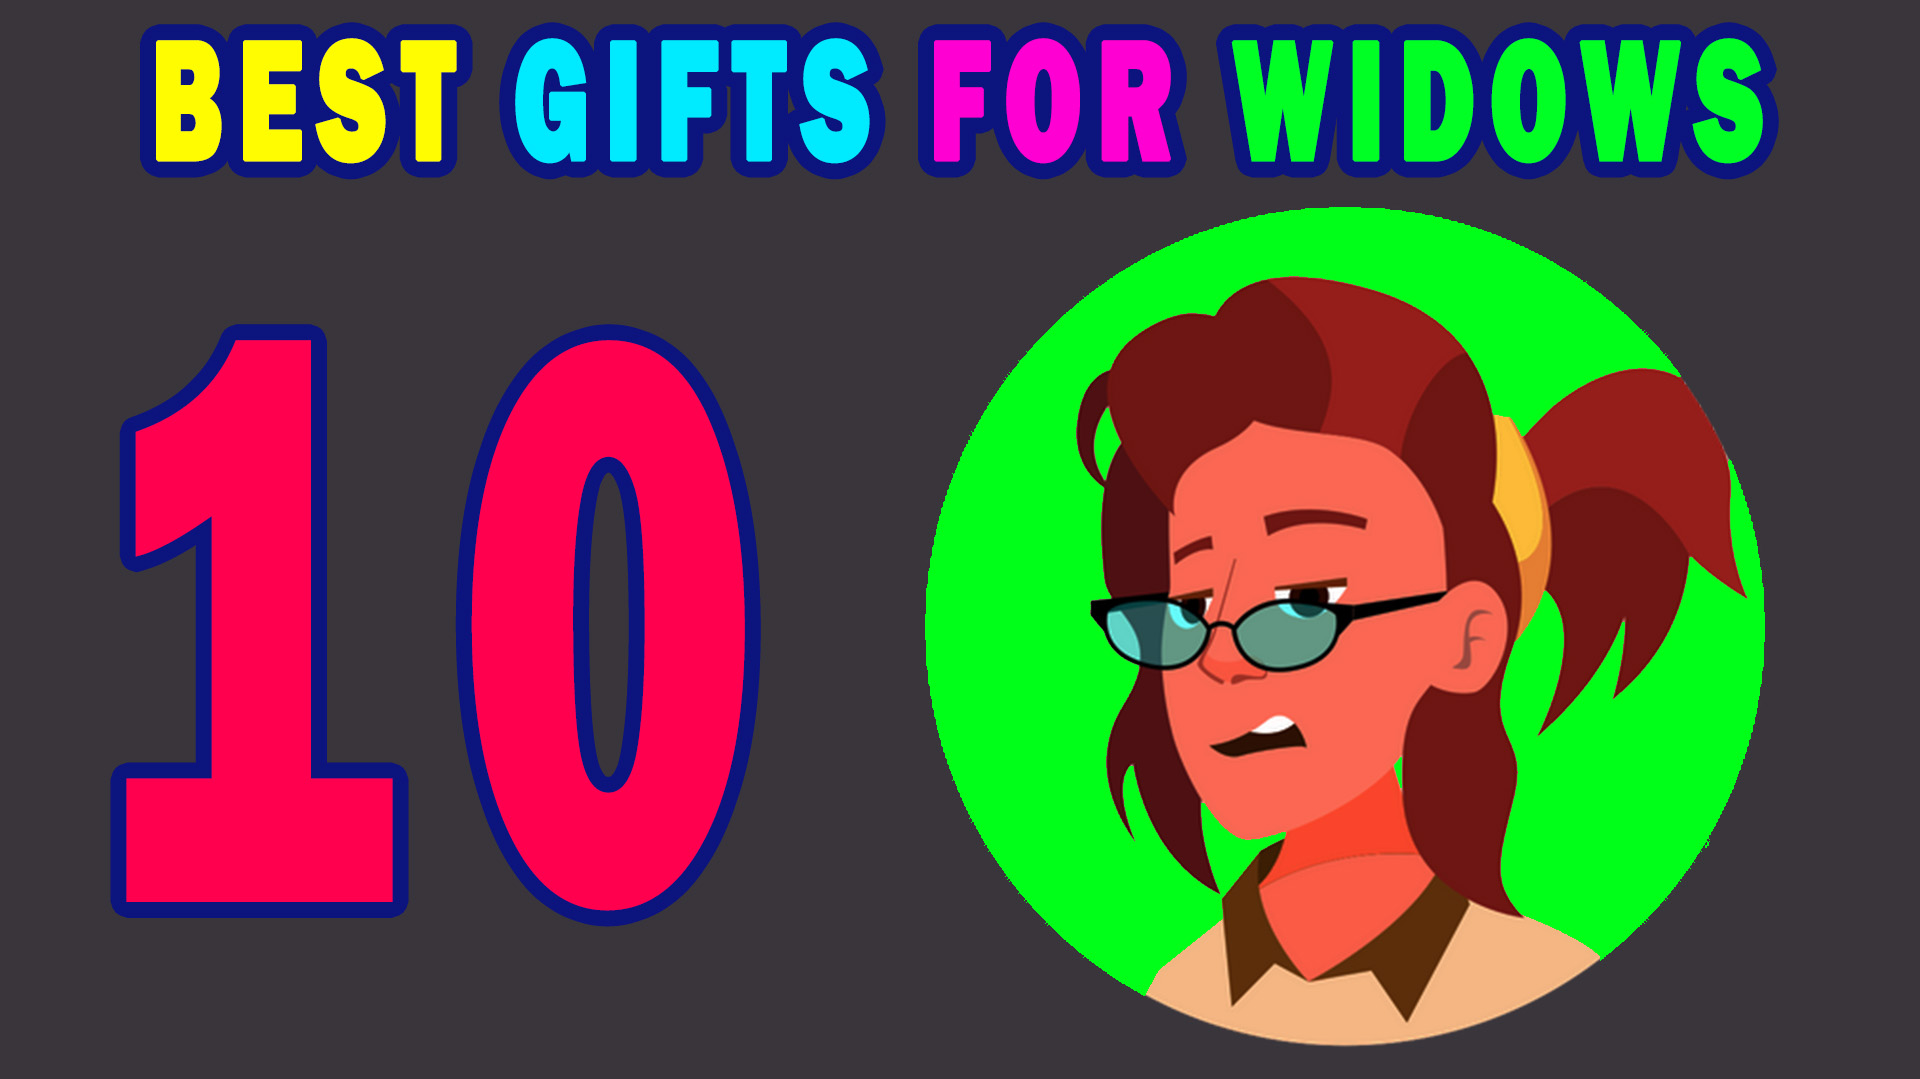 Unique Gift Ideas For Widows